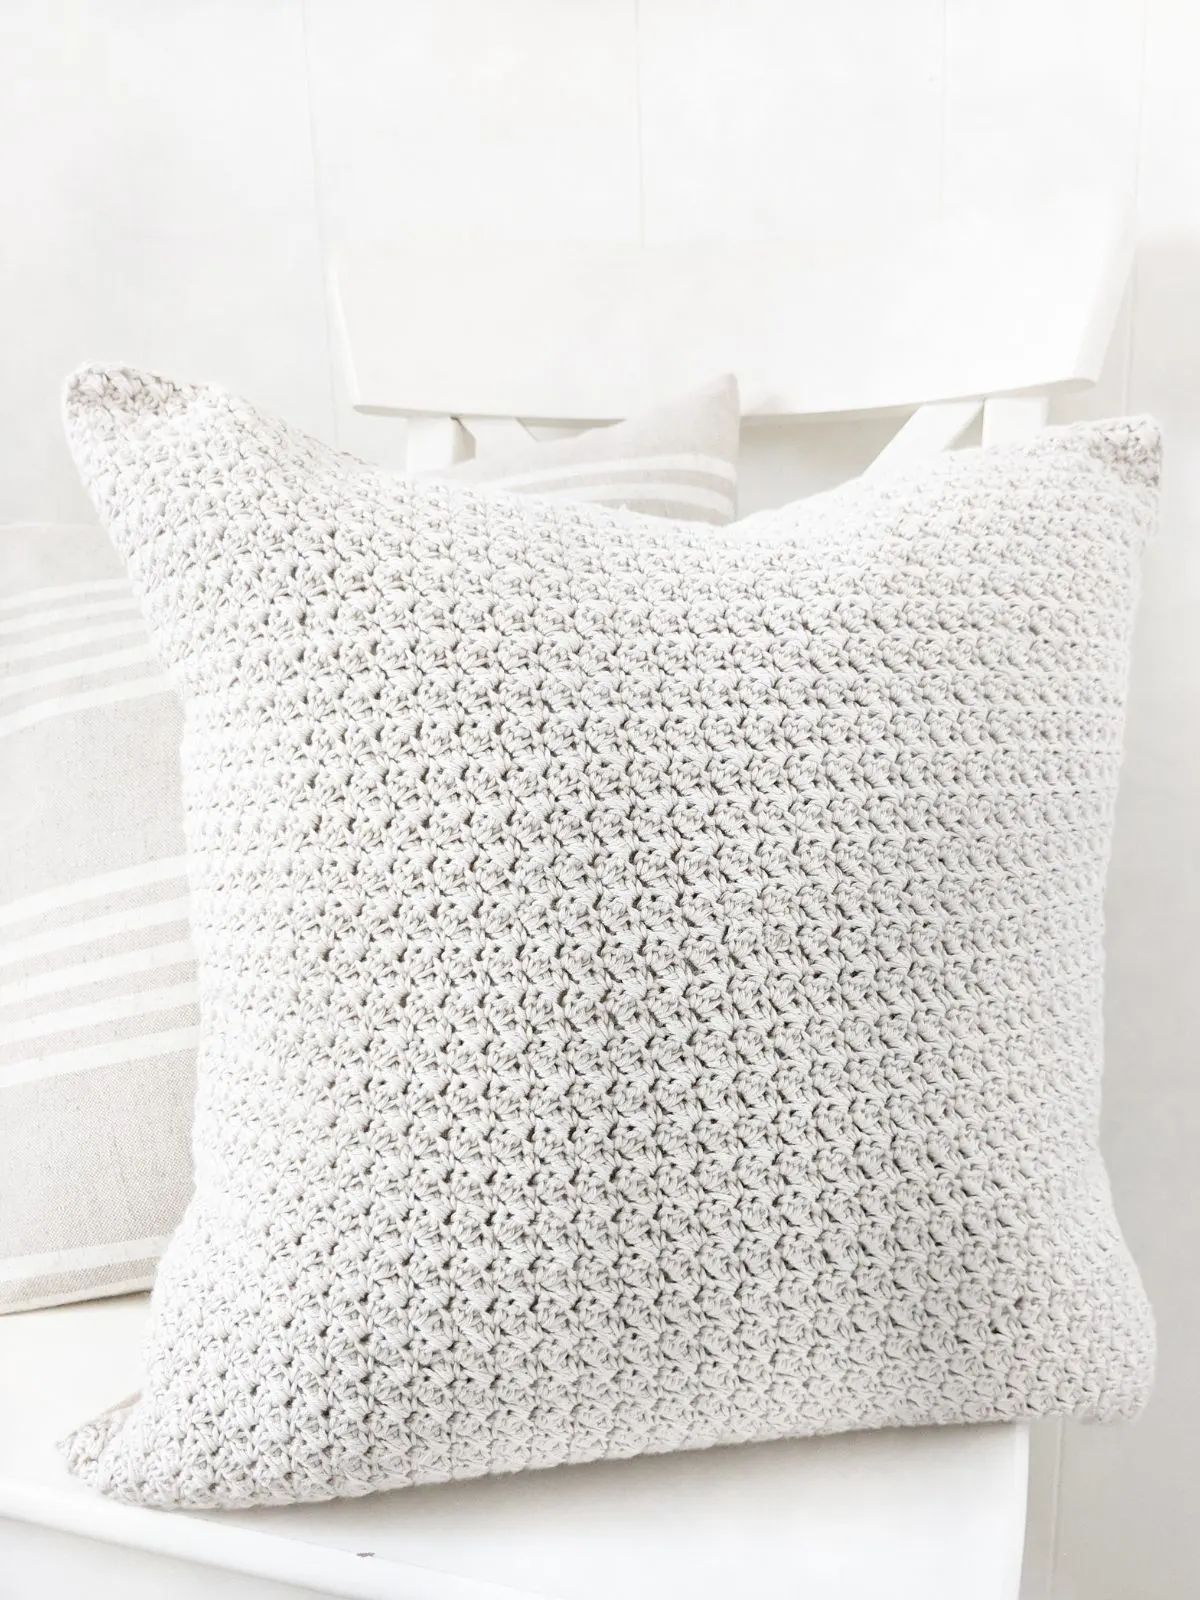 A crochet pillow made using the suzette stitch.